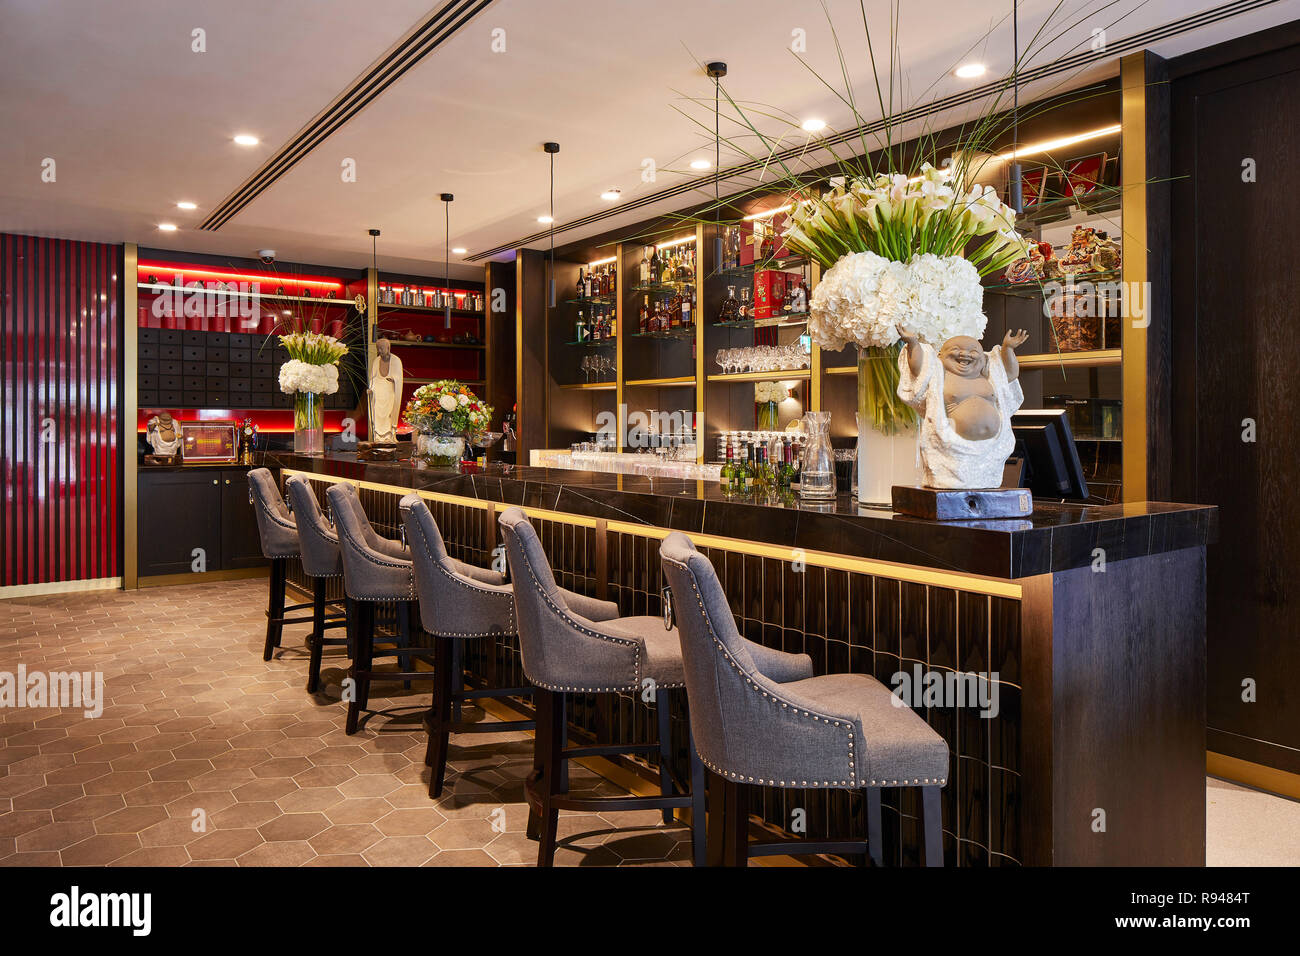 Bar. Royal China Club, London, Vereinigtes Königreich. Architekt: Steif+Trevillion Architekten, 2018. Stockfoto